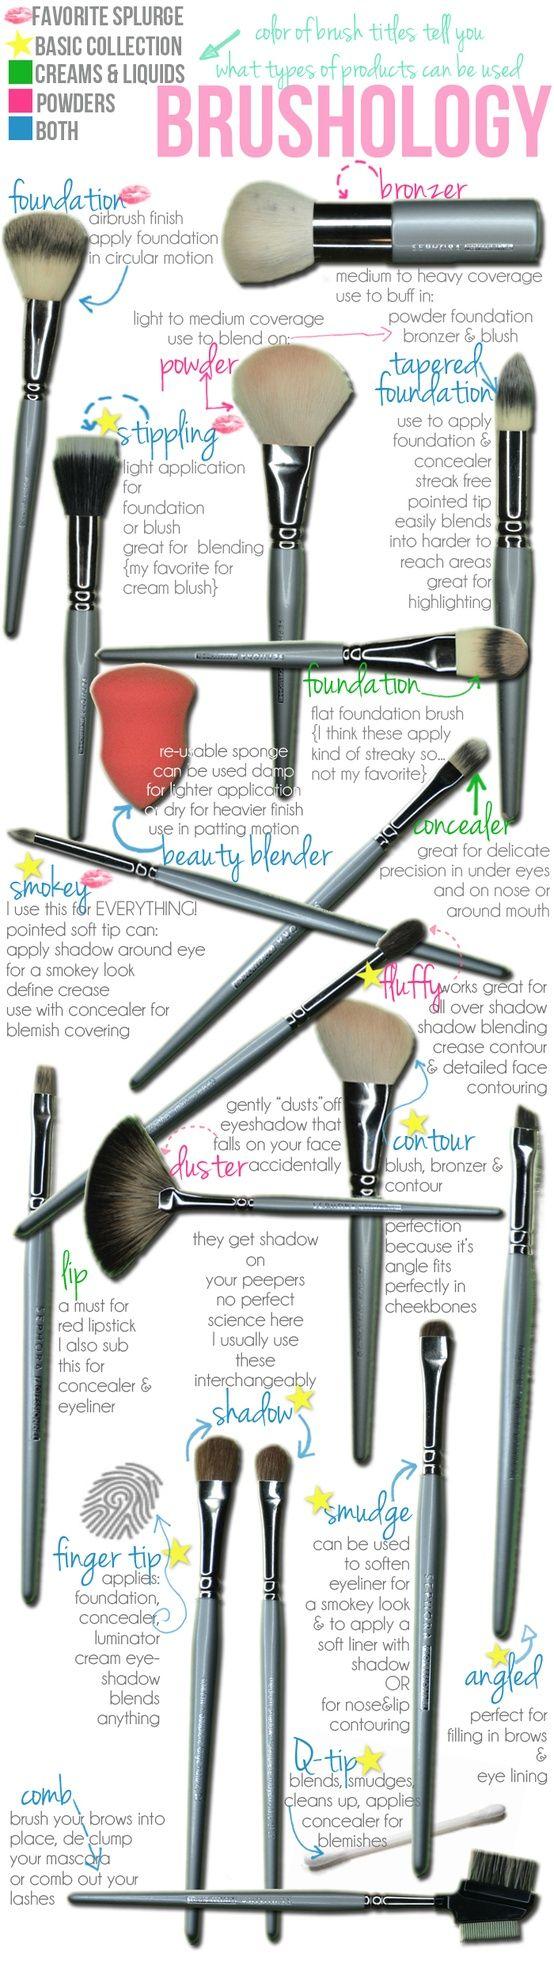 Wedding - Brushology: Know Your Makeup Brushes